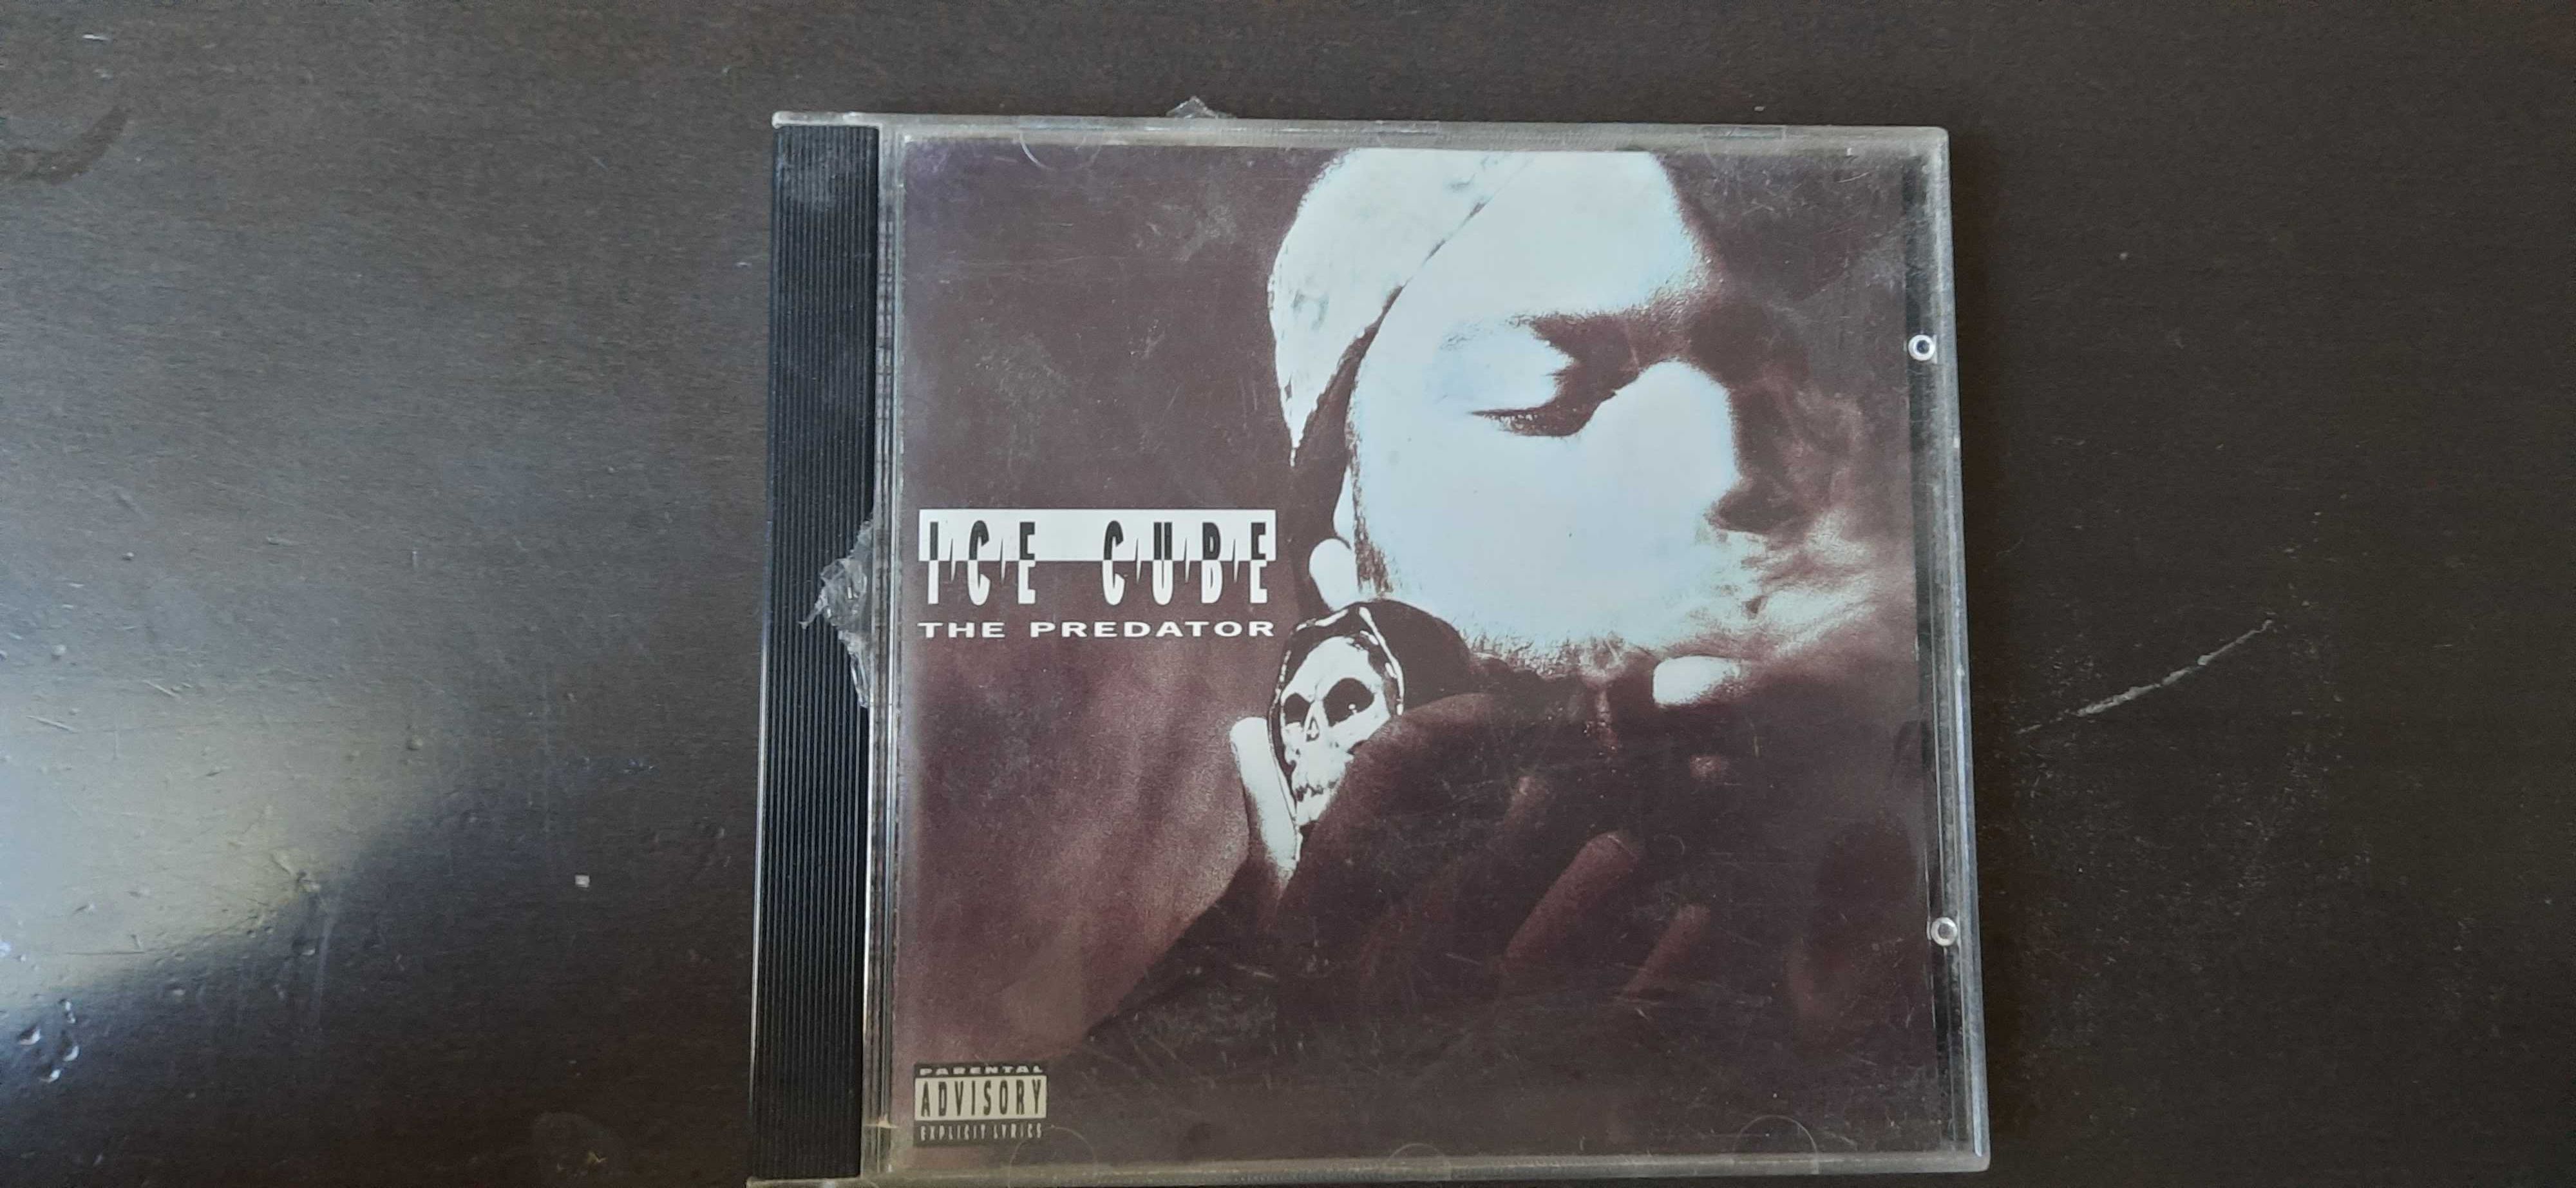 Ice Cube - The Predator
CD